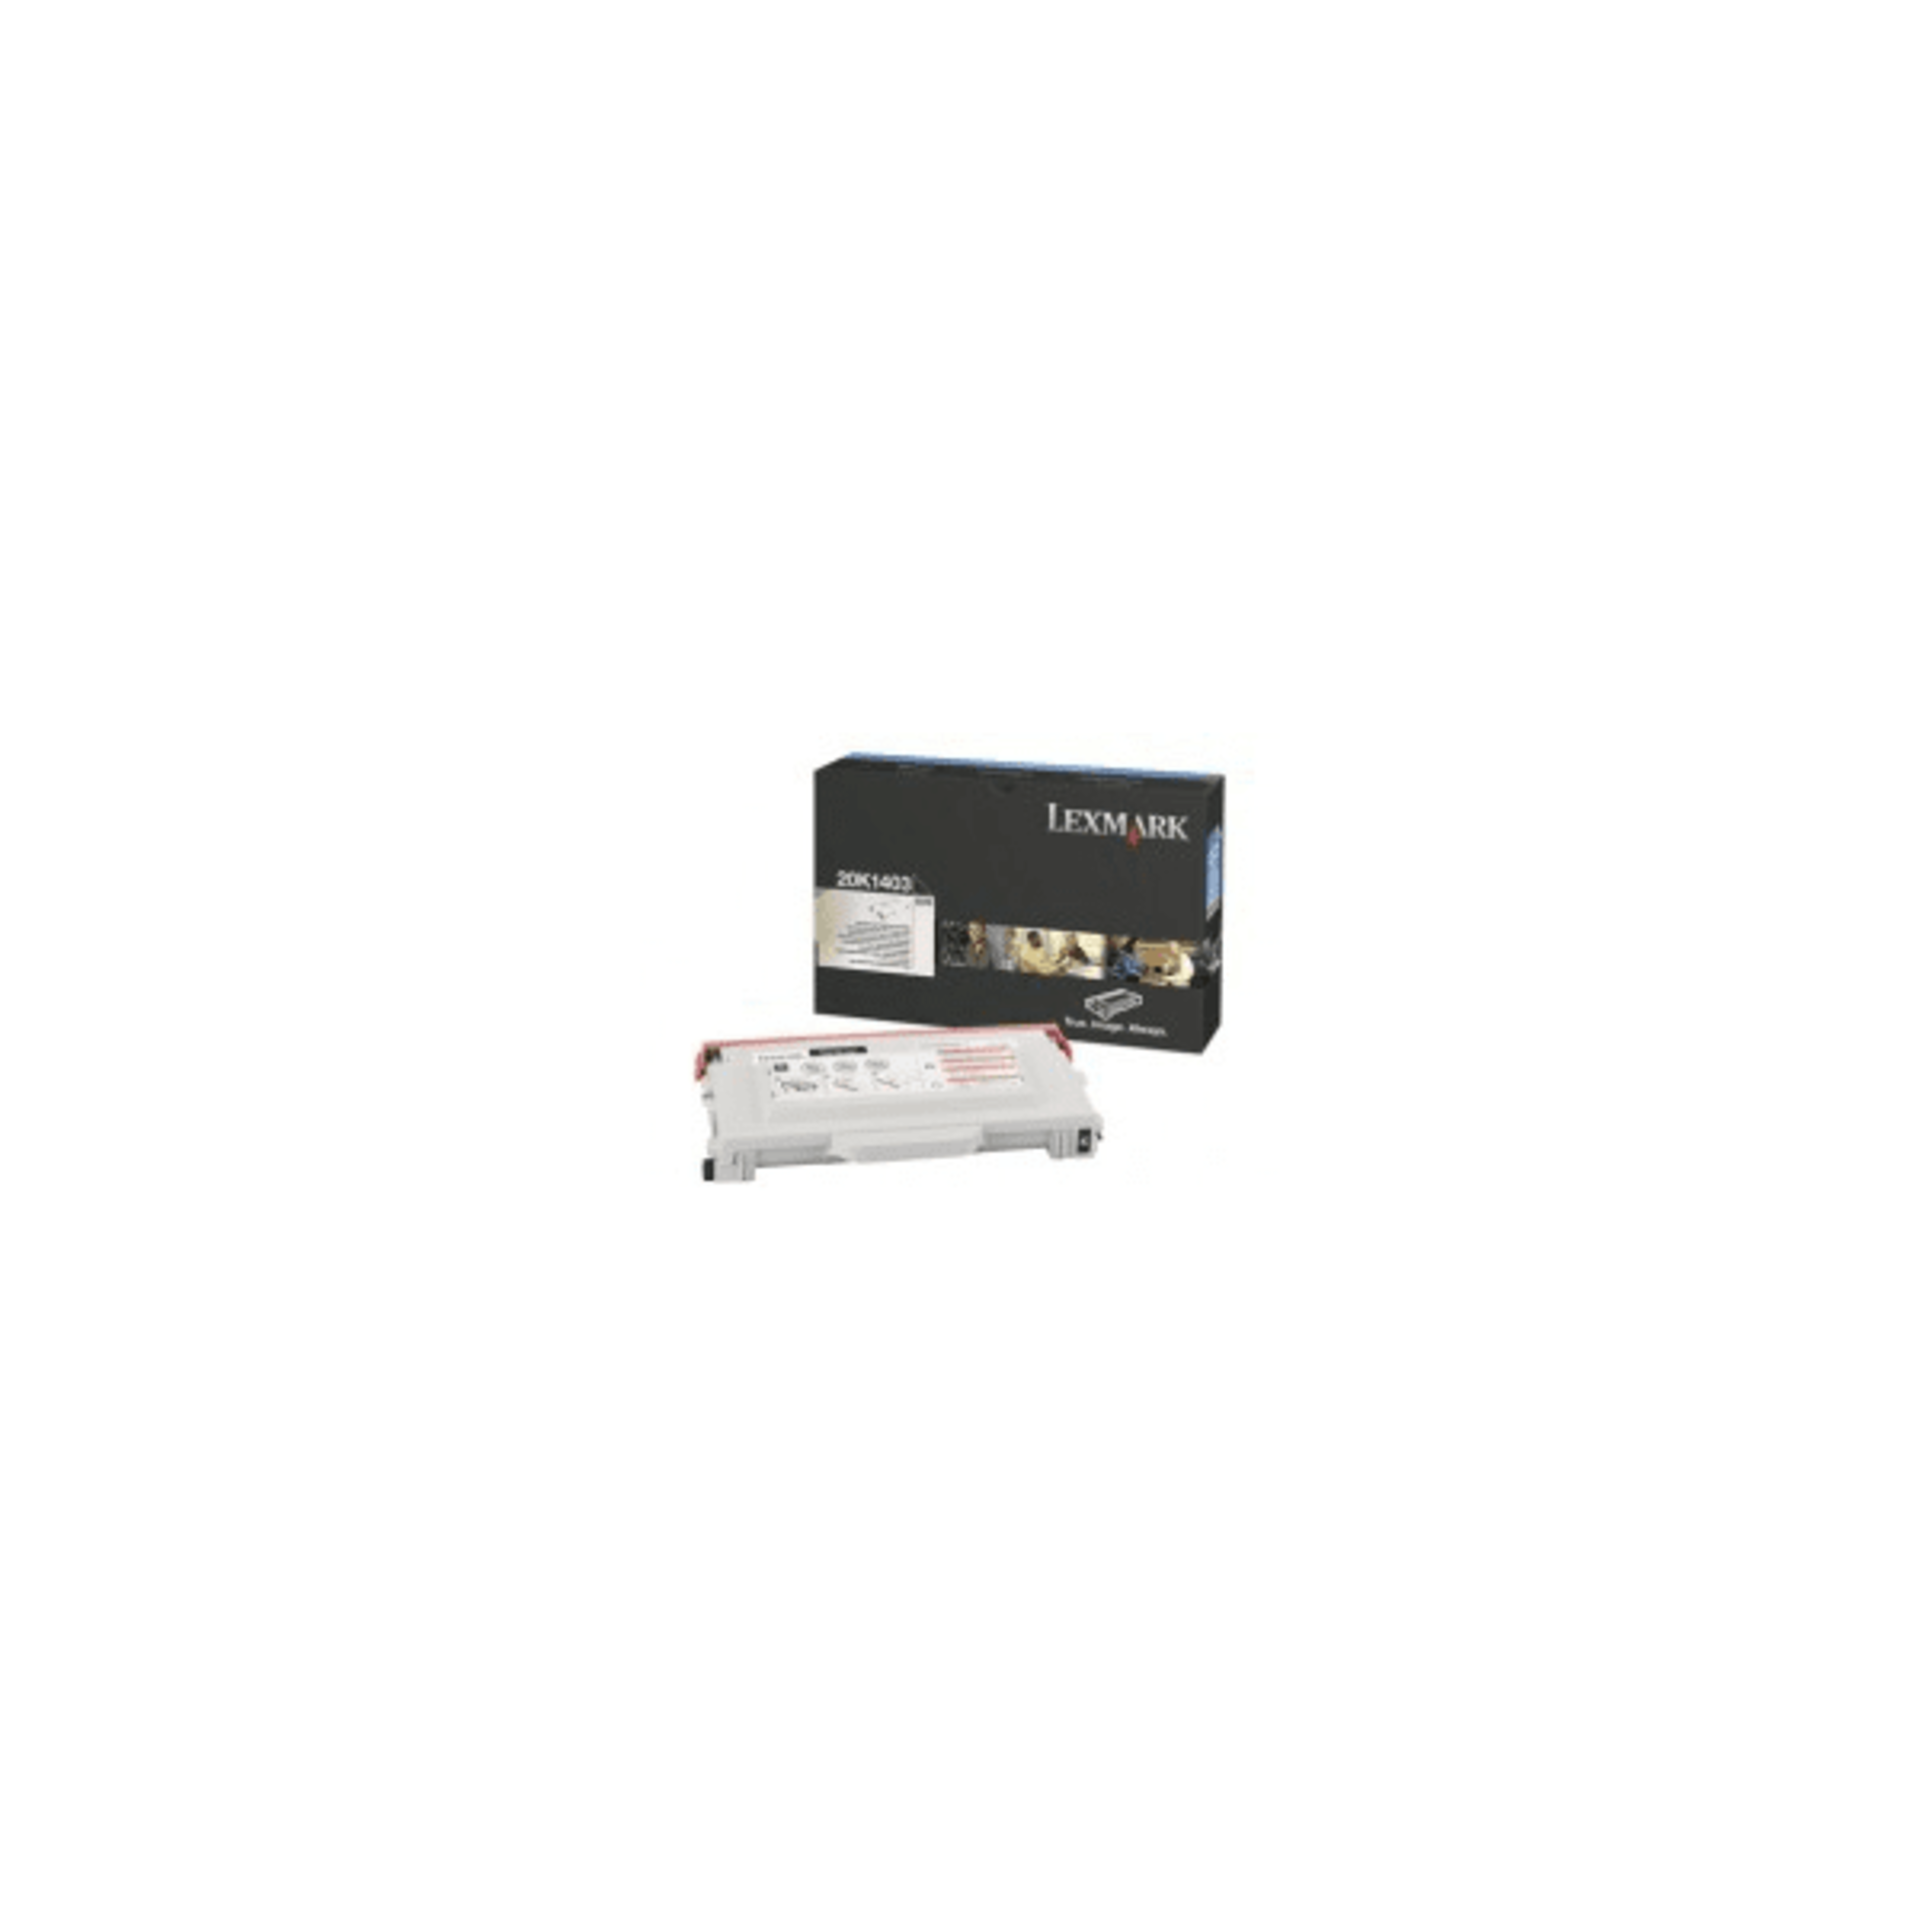 NEW Lexmark 20K1403 Black High Capacity Toner Cartridge RRP £234.67 - EBR